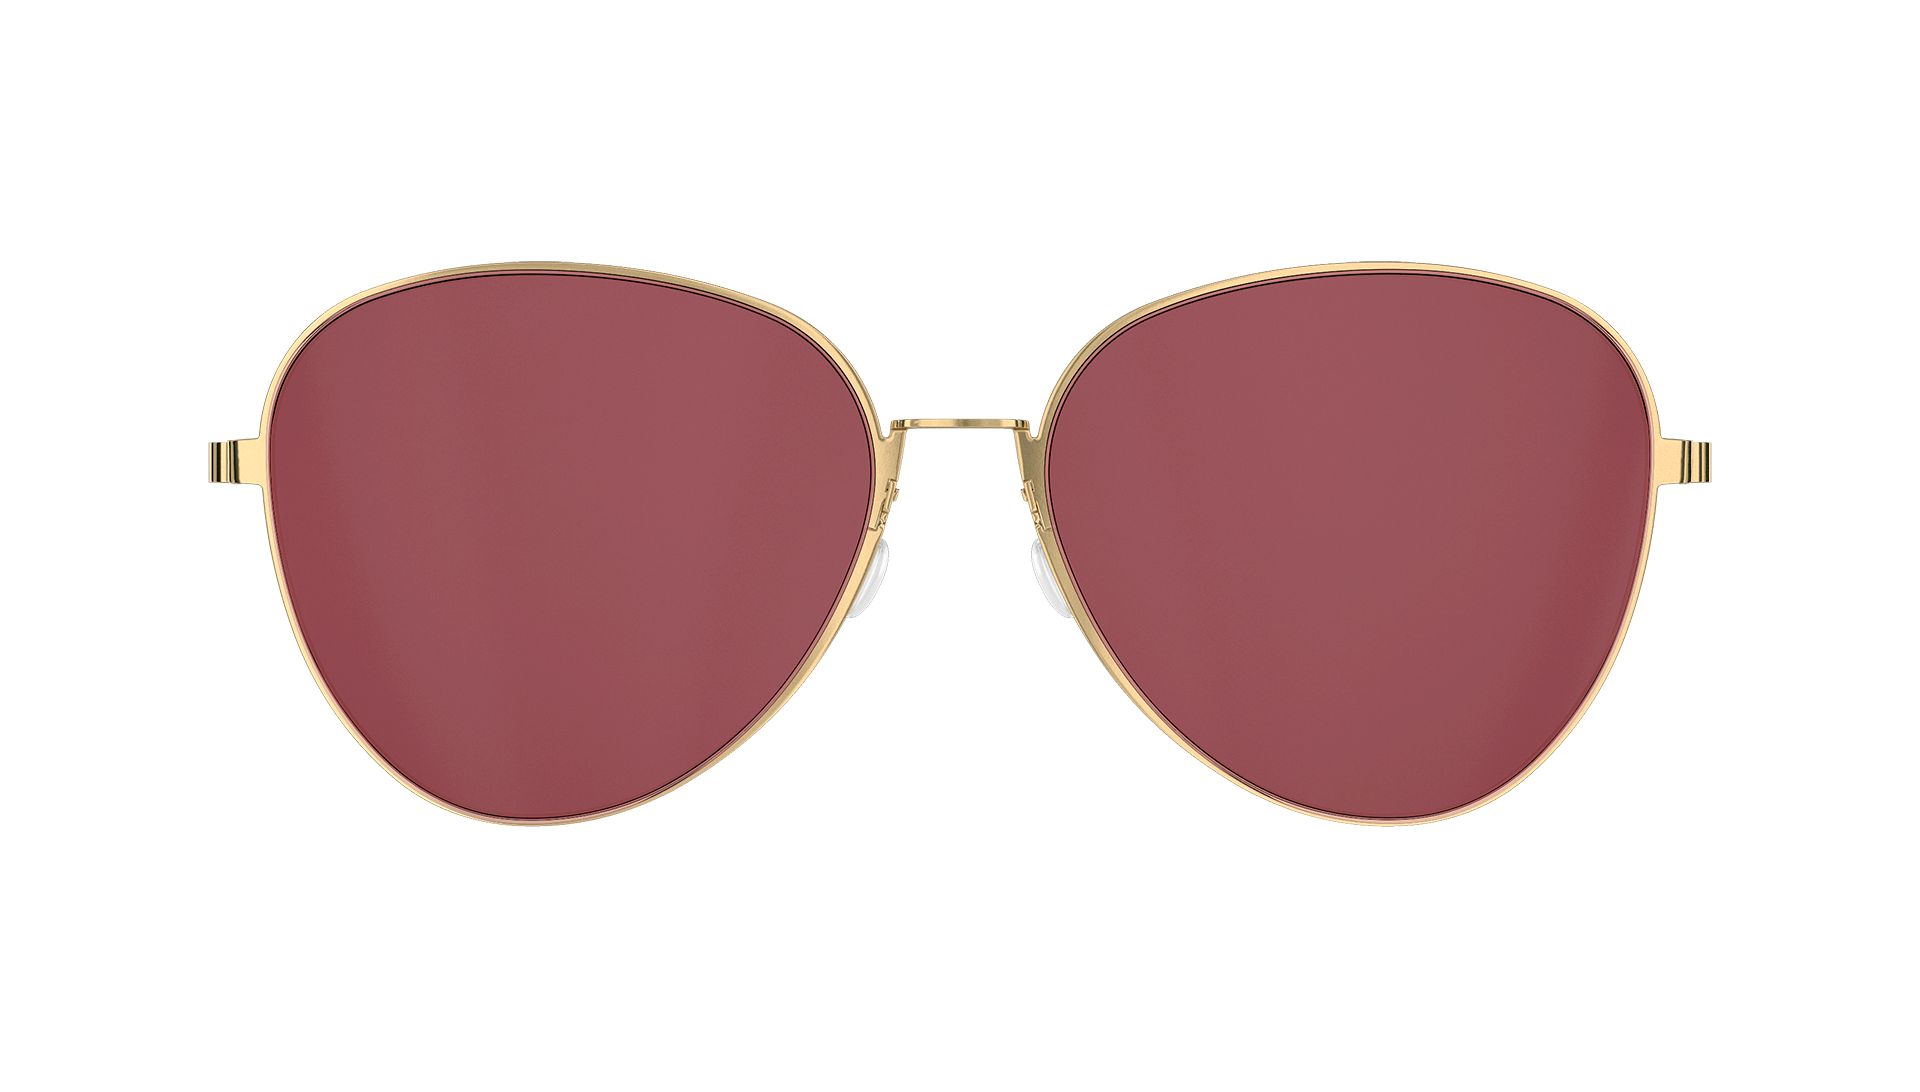 LINDBERG model 8908 gold aviator shaped sunglasses with burgundy tinted lenses